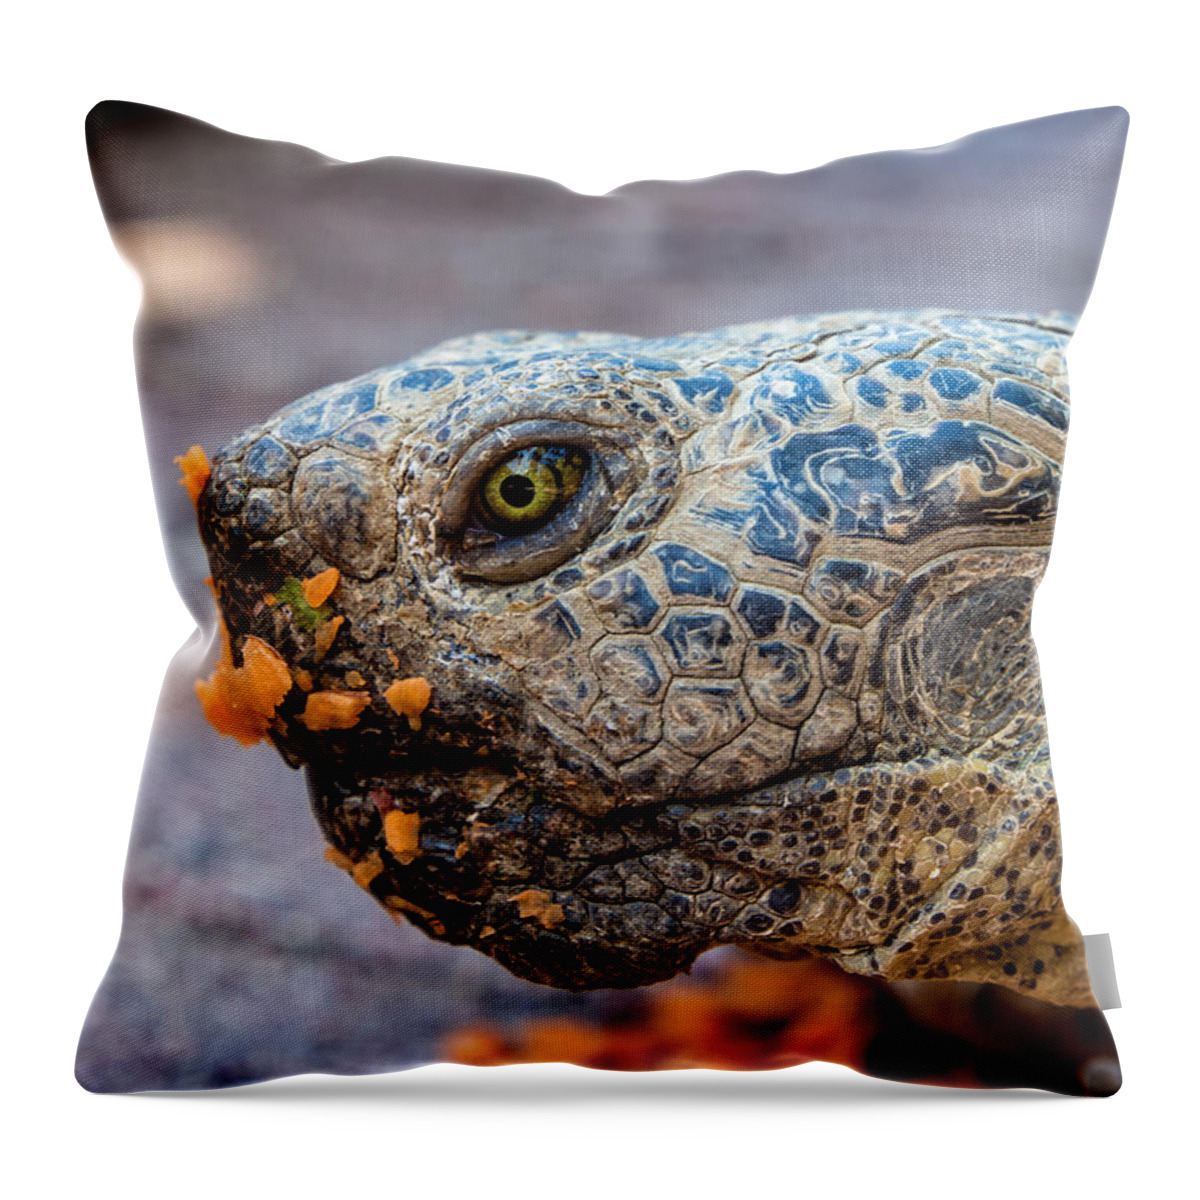 Desert Tortoise Throw Pillow featuring the photograph Chatsworth Eats Carrots by Gary Karlsen